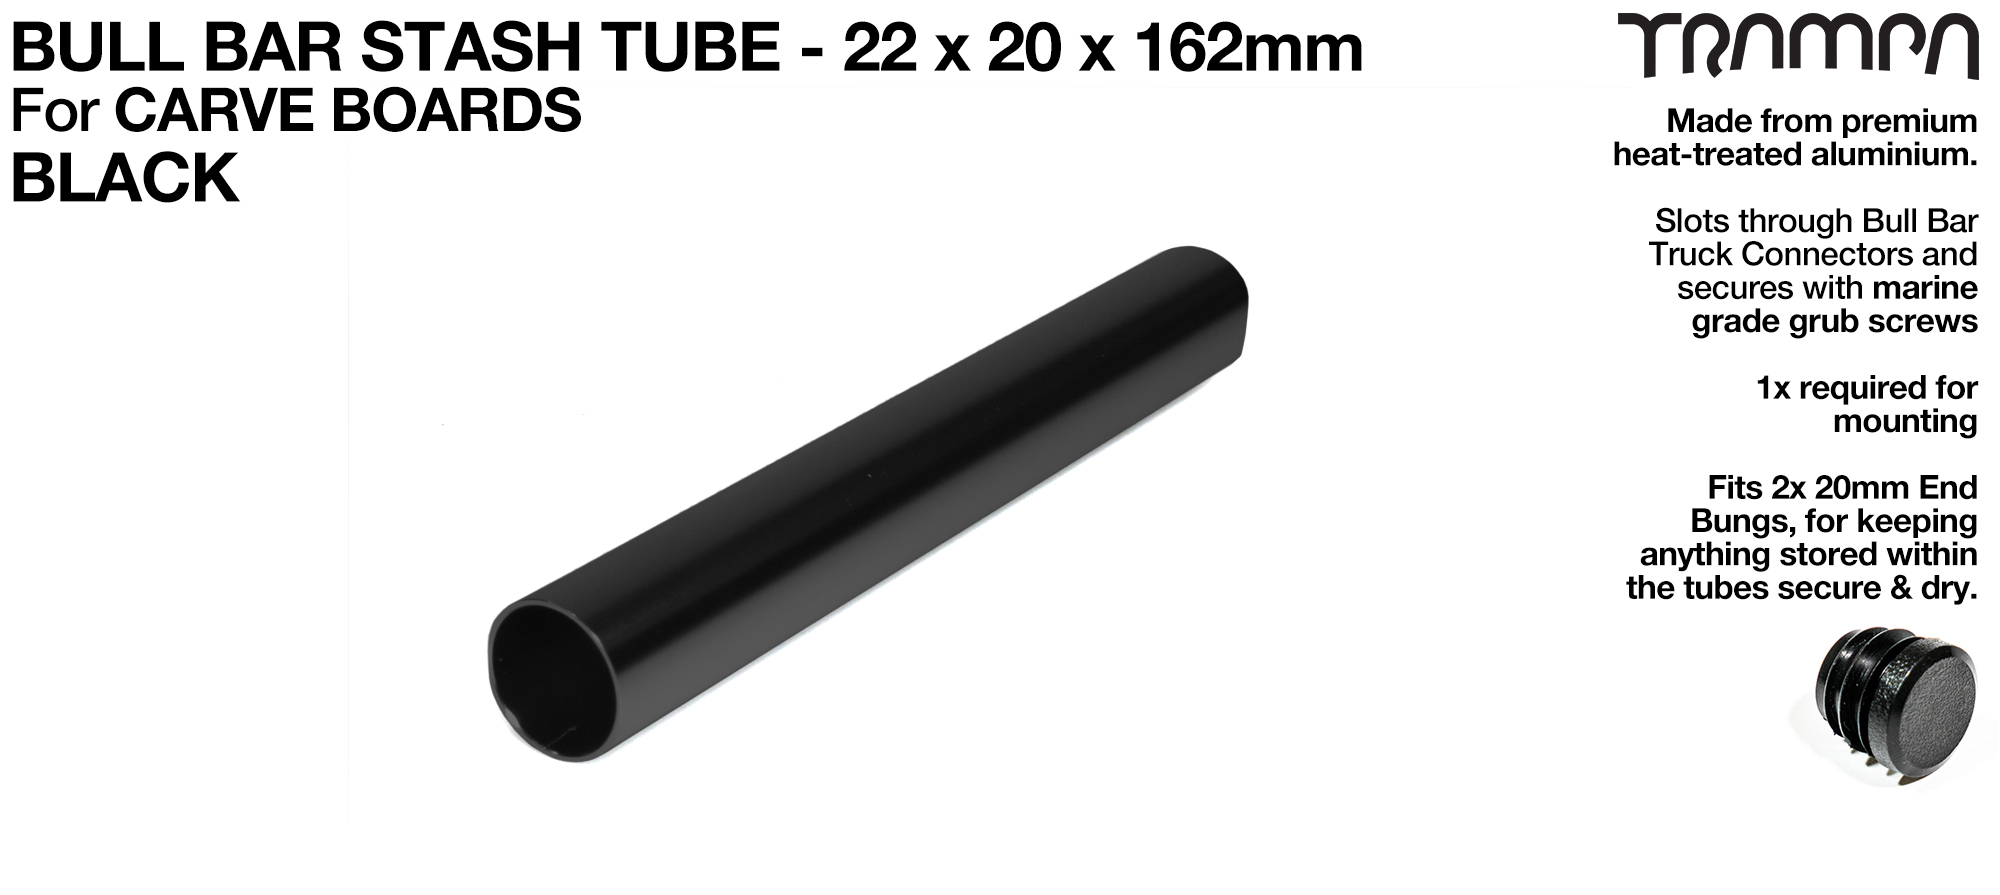 Carve Board Bull Bar Hollow Aluminium Stash Tube - BLACK 22 x 20 x 162 mm